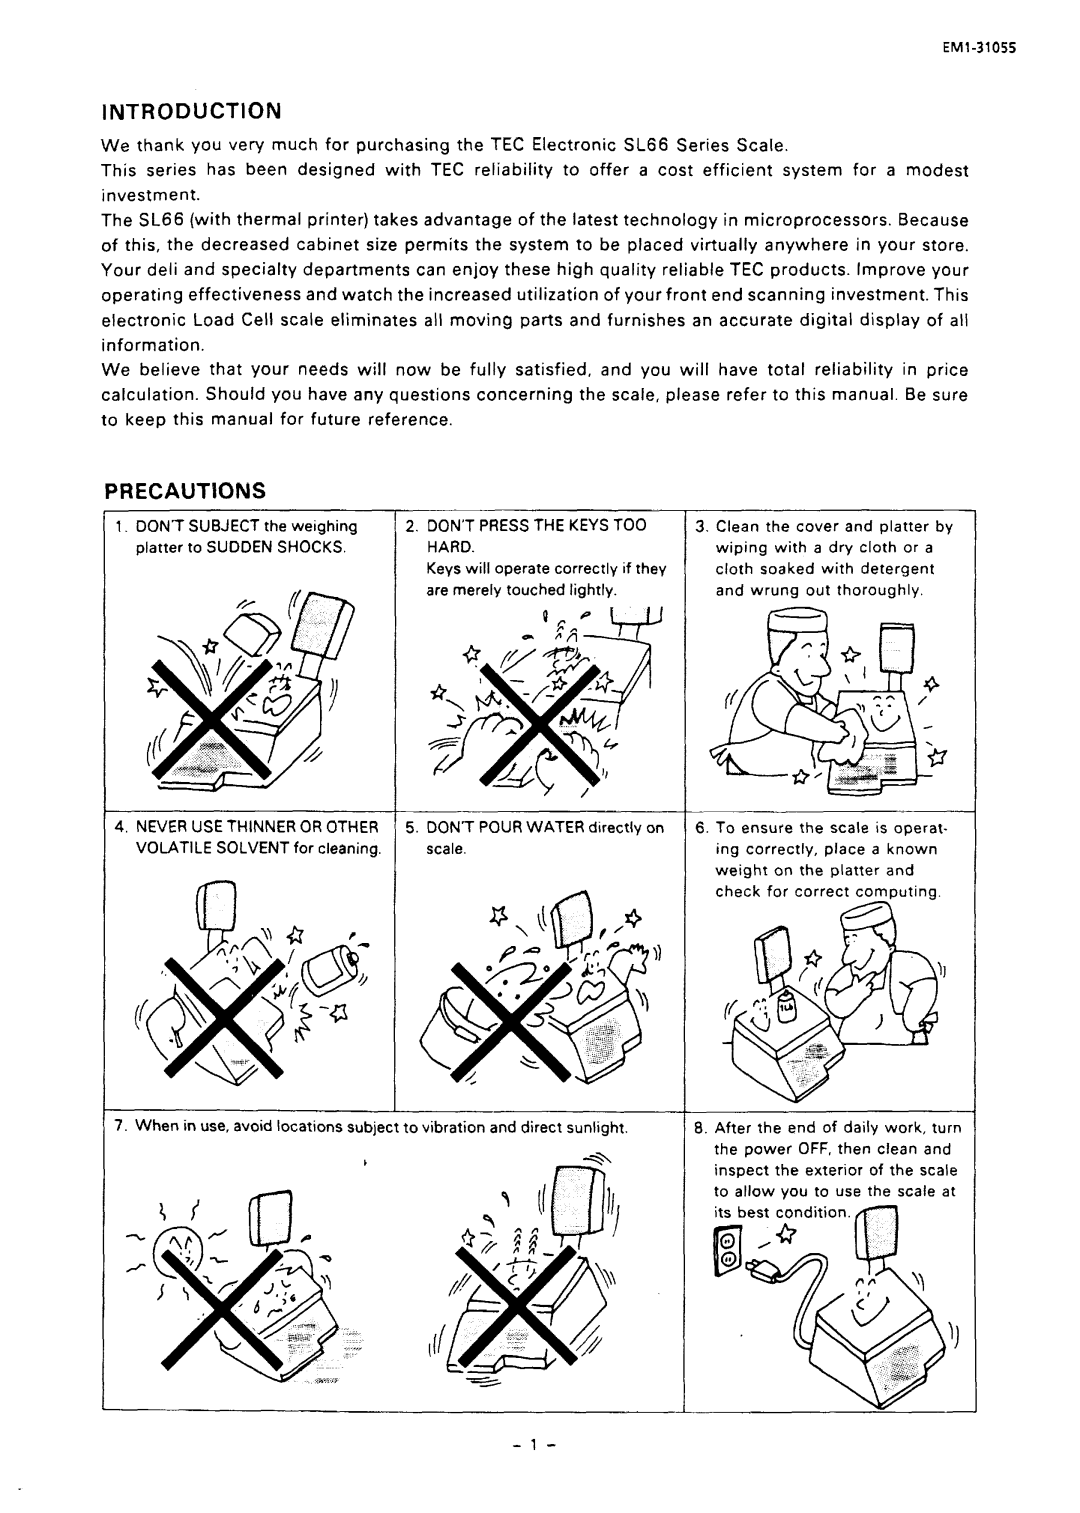 Toshiba SL66 SERIES, EMl-31055 manual Introduction, Precautions 